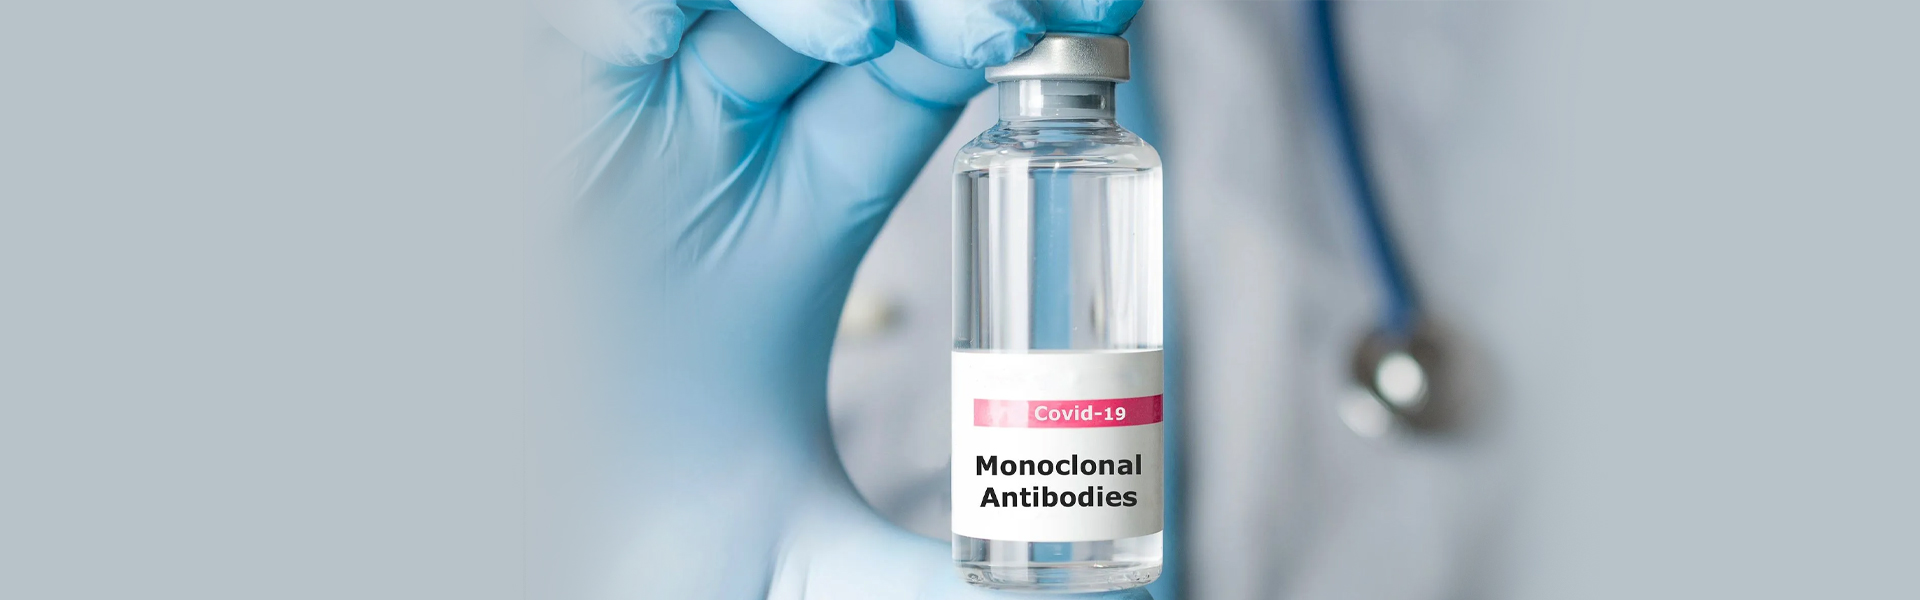 Monoclonal Antibodies - Bamlanivimab Treatment against COVID-19